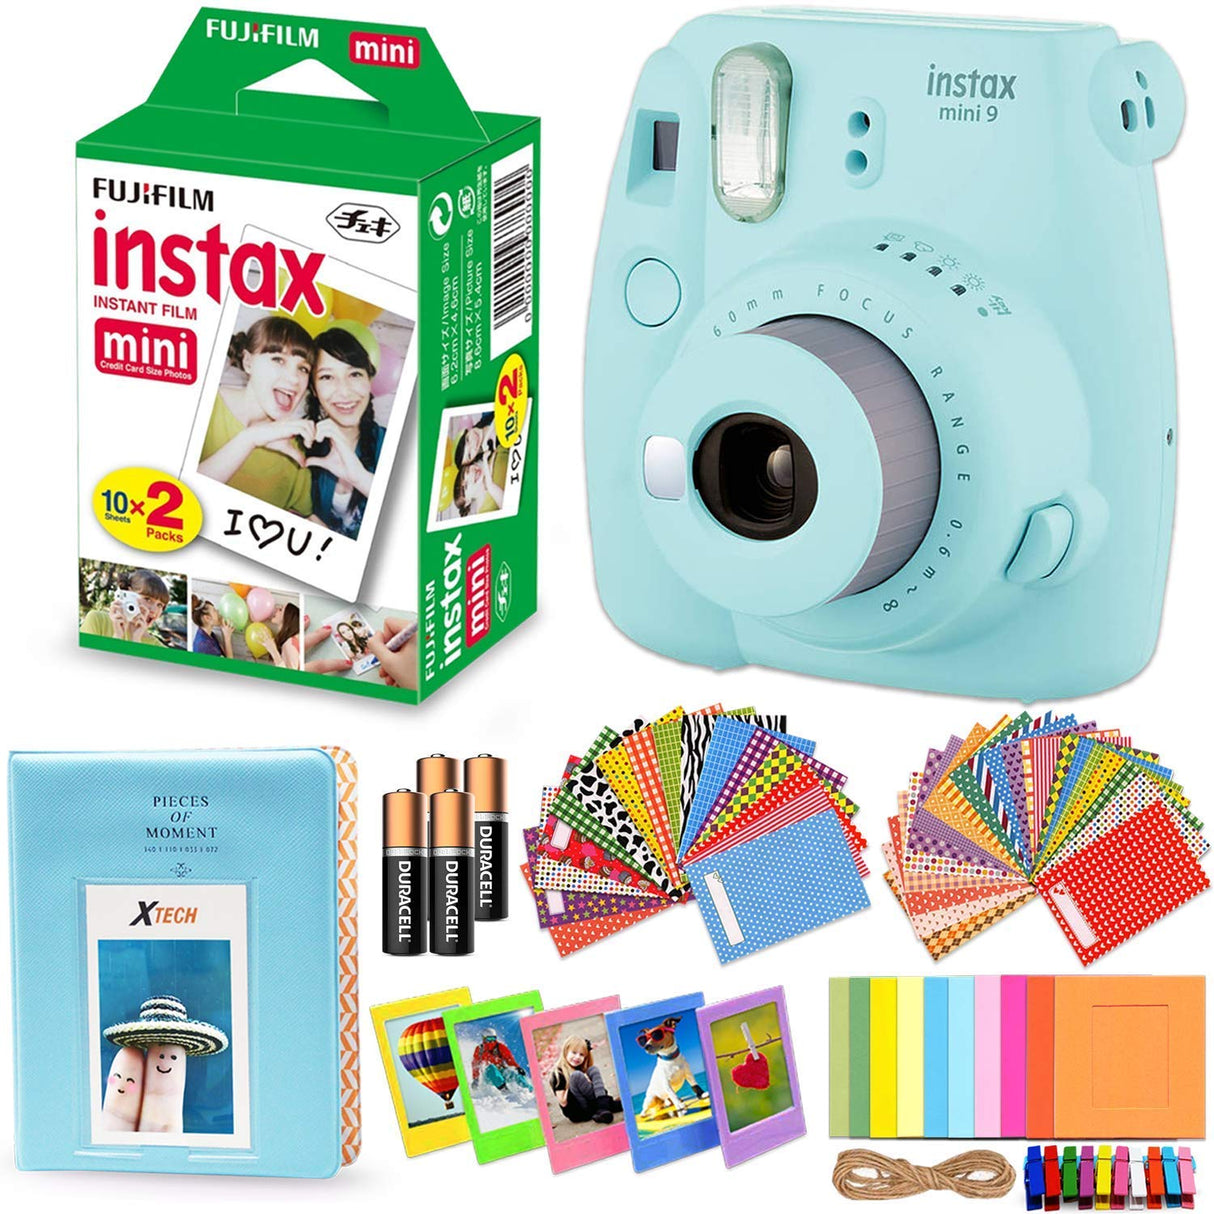 Fujifilm Instax Mini 9 Instant Camera (Ice Blue) with Instax Mini Film Pack